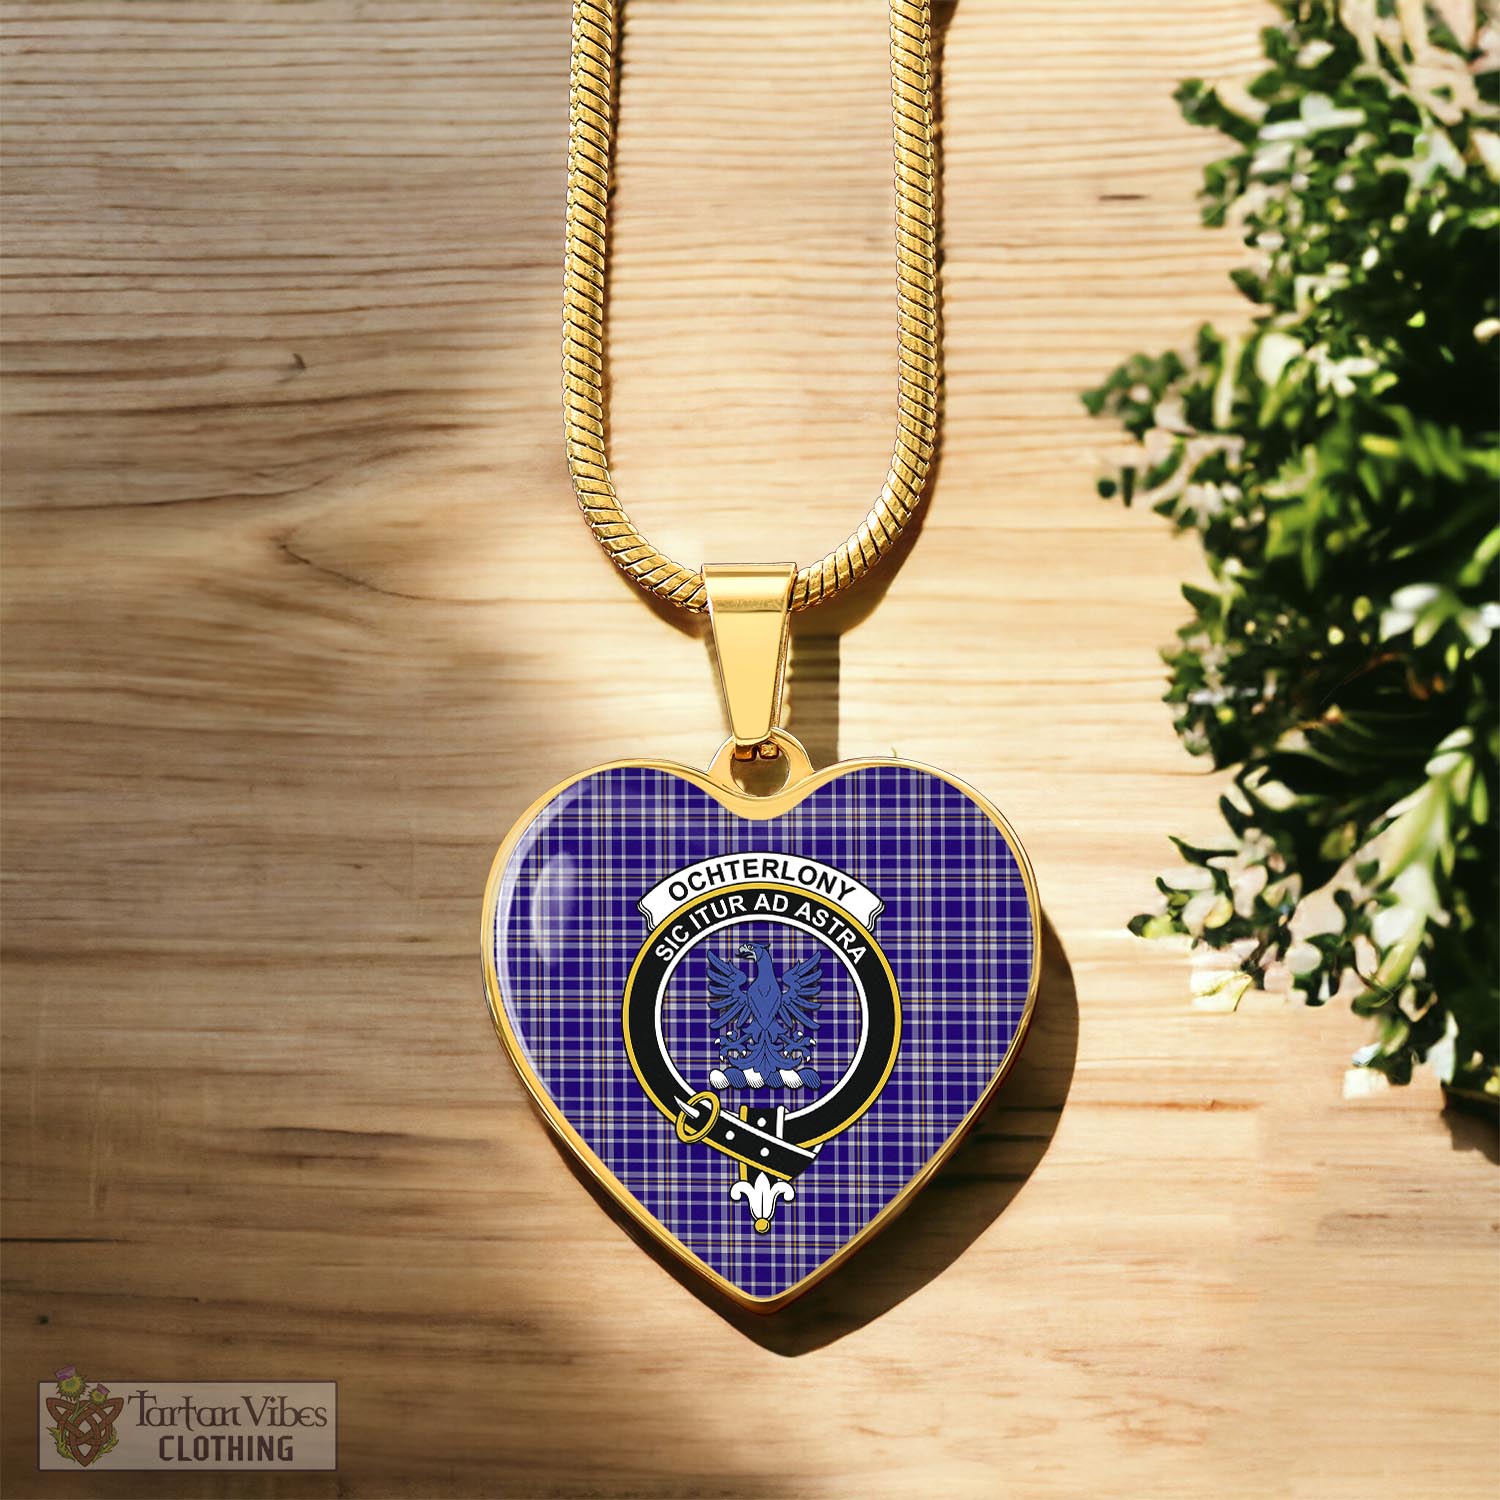 Tartan Vibes Clothing Ochterlony Tartan Heart Necklace with Family Crest